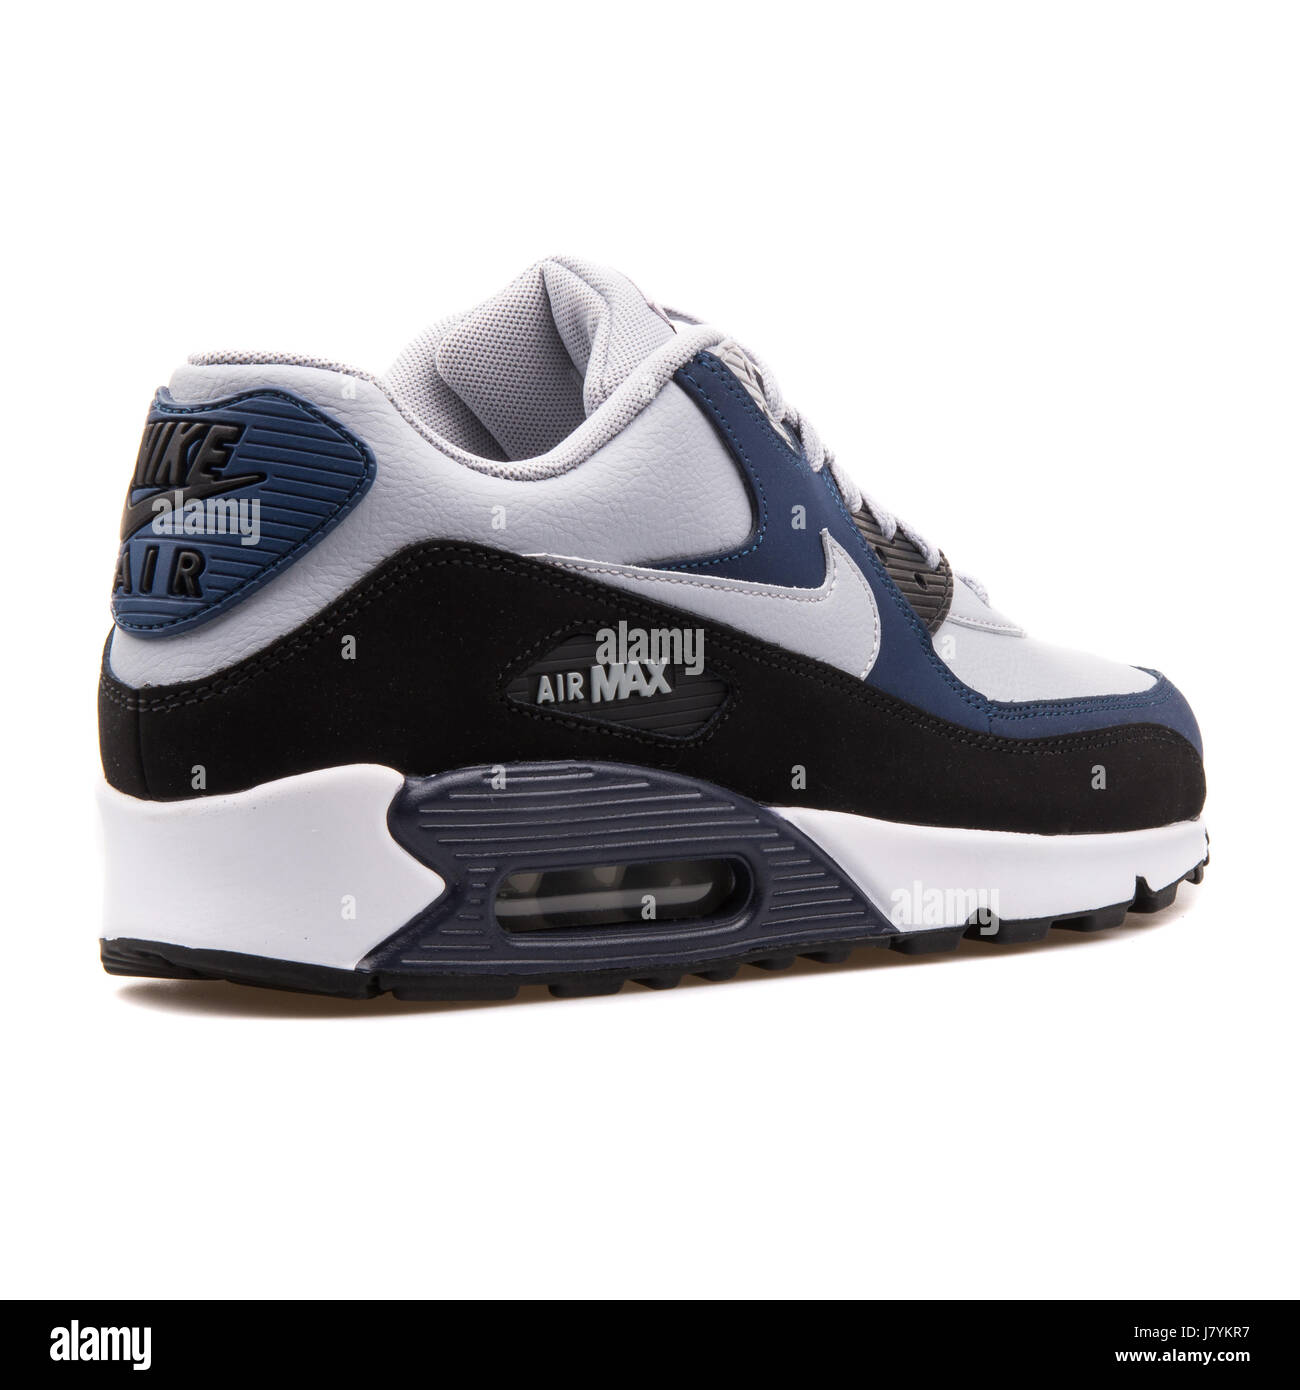 Nike Air Max 90 LTR Gris azul marino hombres zapatillas deportivas -  652980-011 Fotografía de stock - Alamy